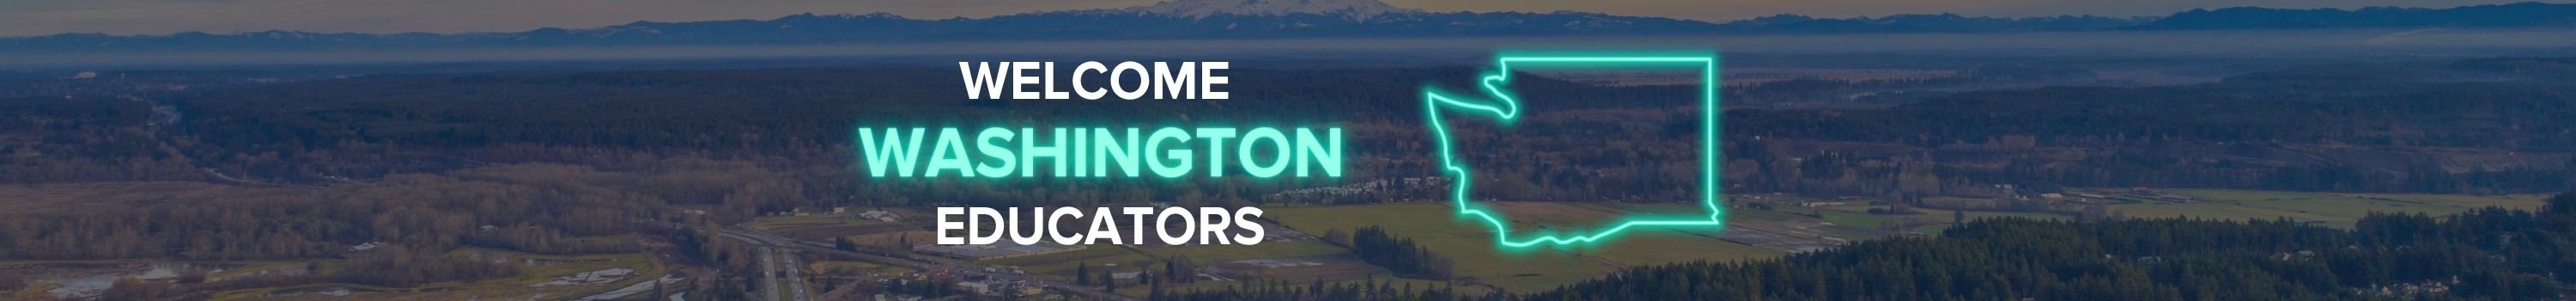 Welcome Washington Educators